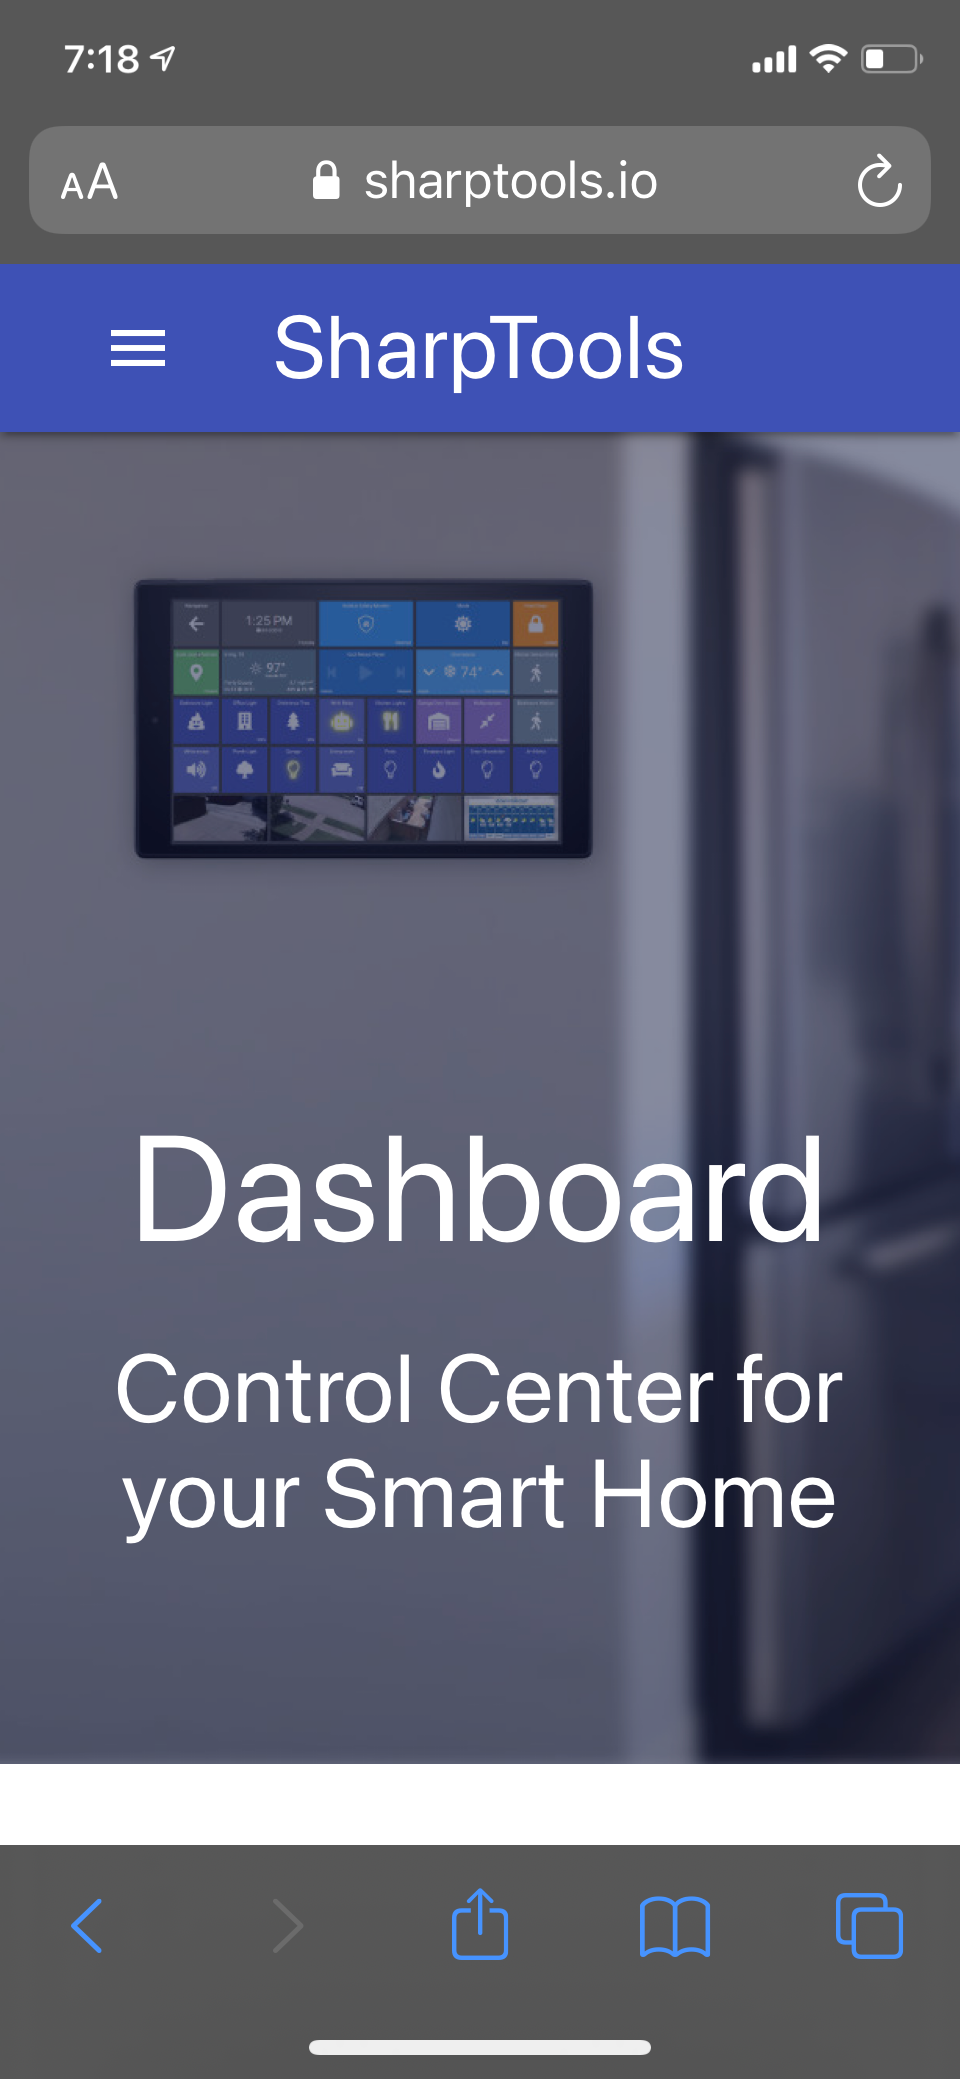 Sharptools Dashboard Control Center Screen